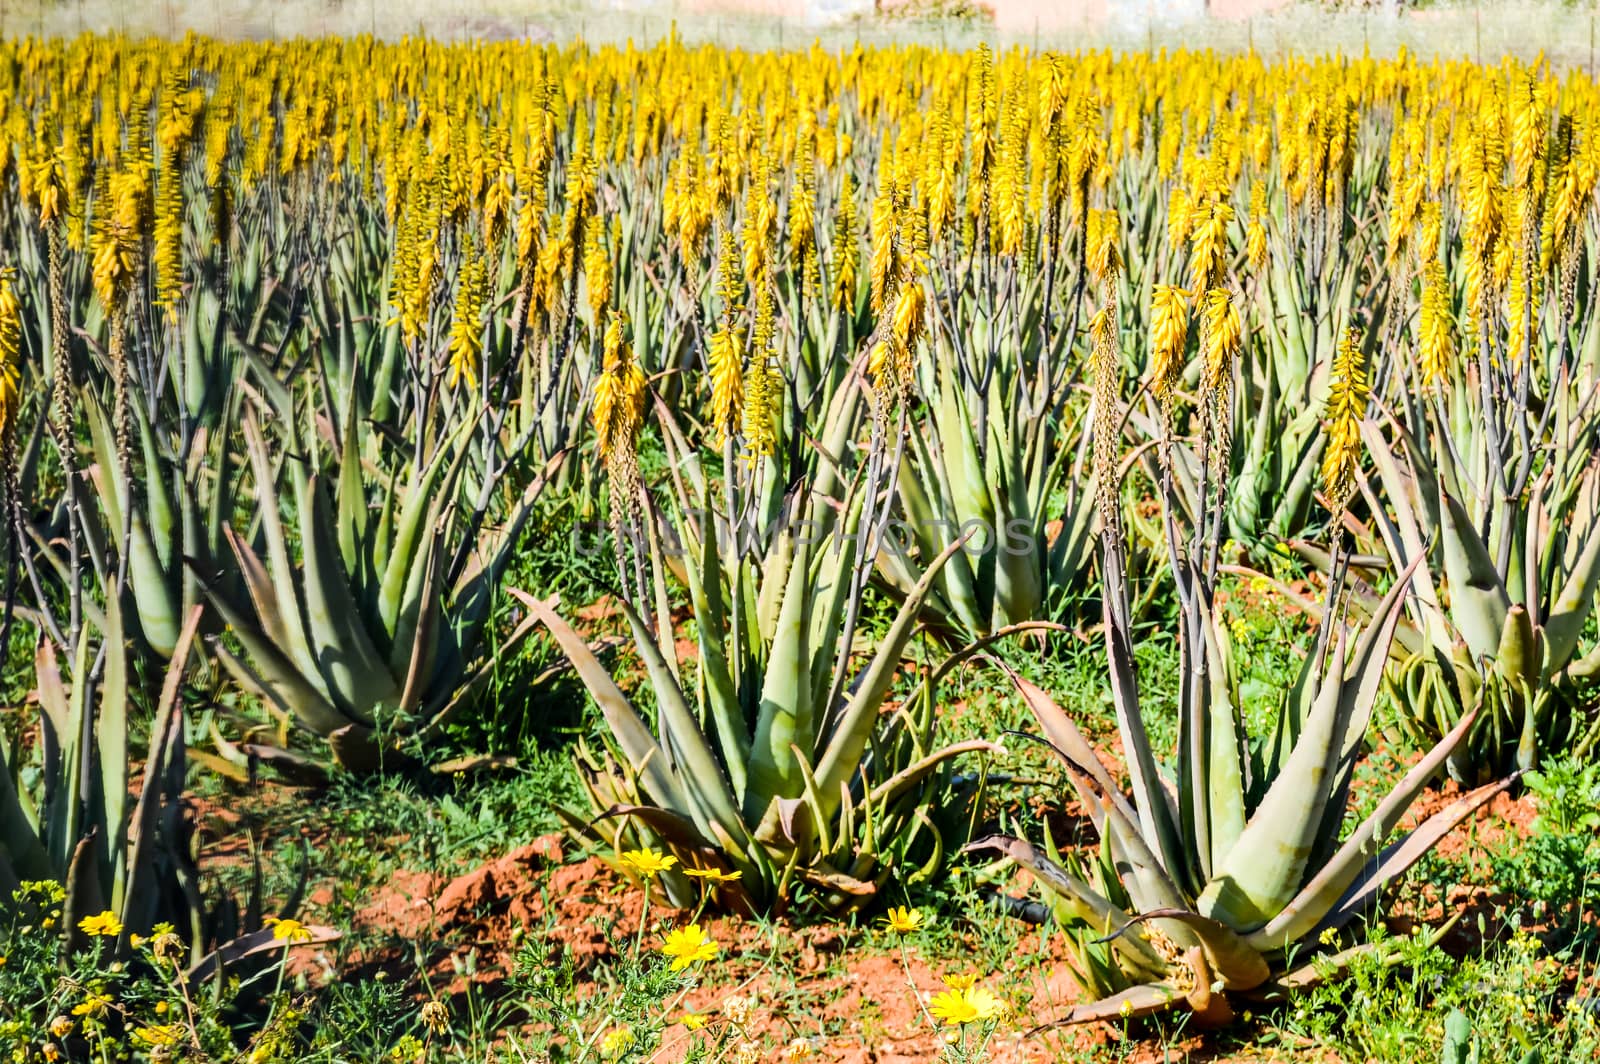 Aloe Vera field on the Mediterranean coast. Crete, Greece.